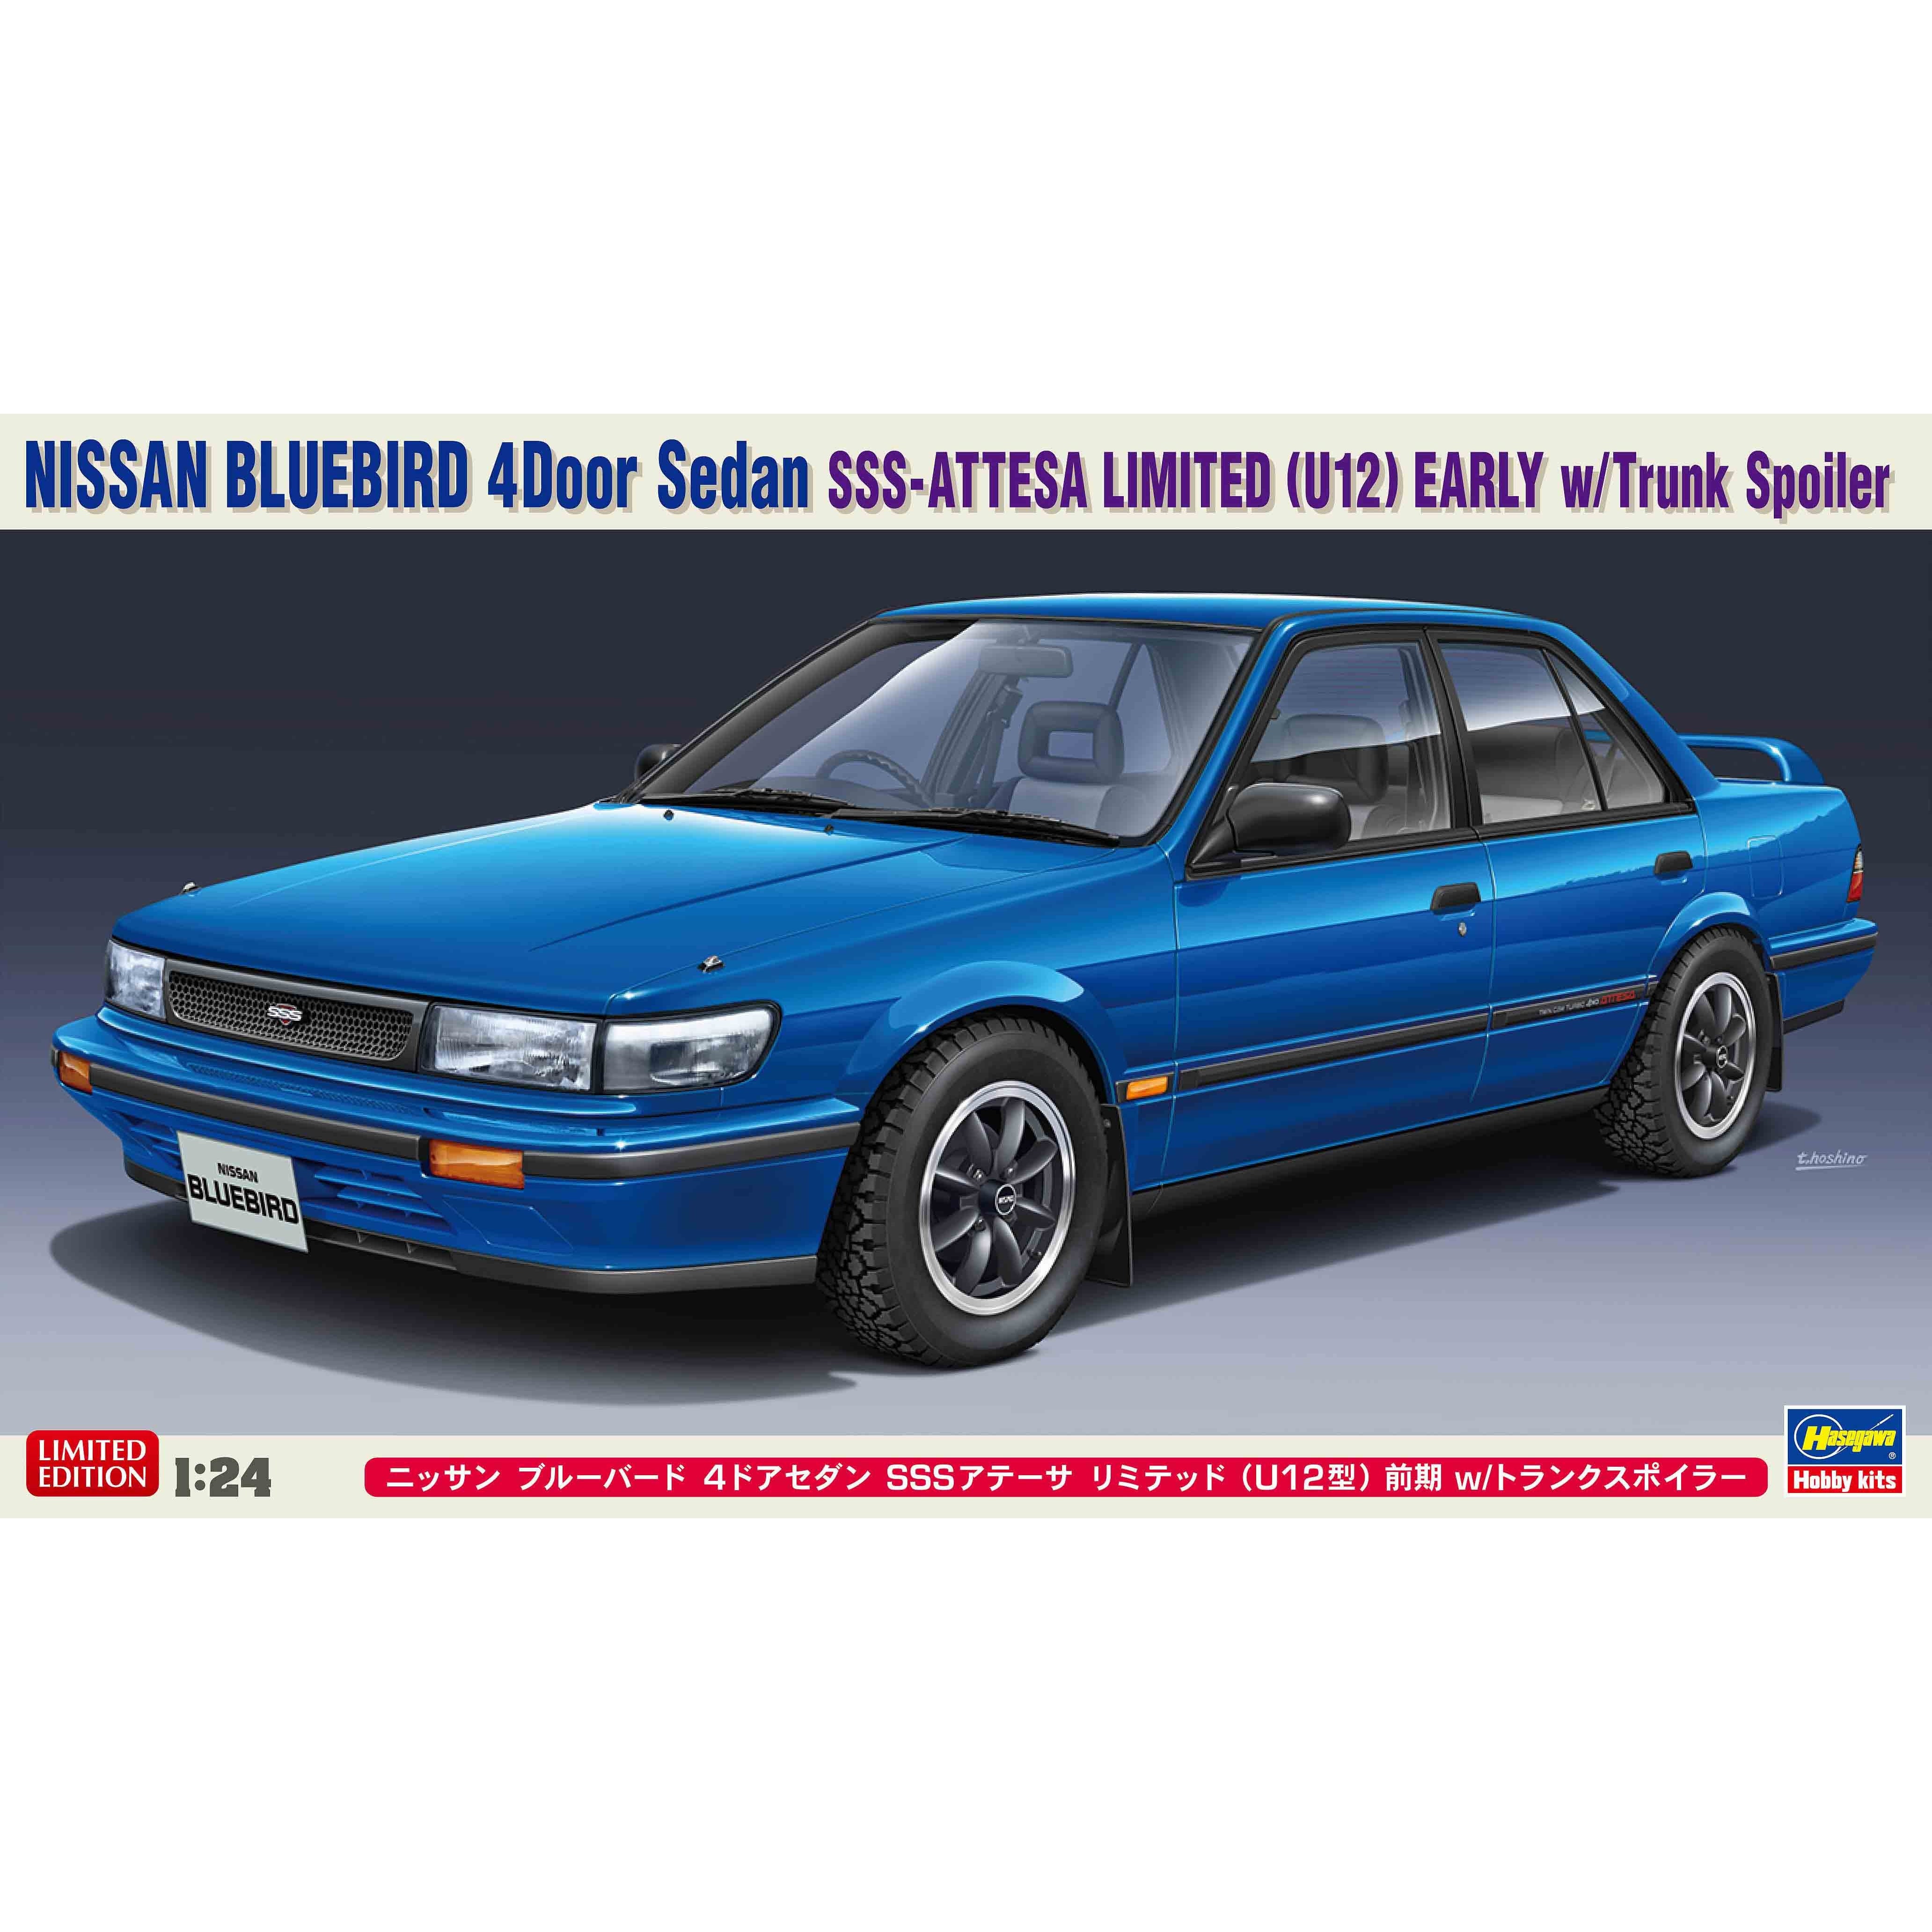 Nissan Bluebird 4 Door Sedan SSS-Attesa Limited (U12) Early w/Trunk Spoiler 1/24 #20562 by Hasegawa